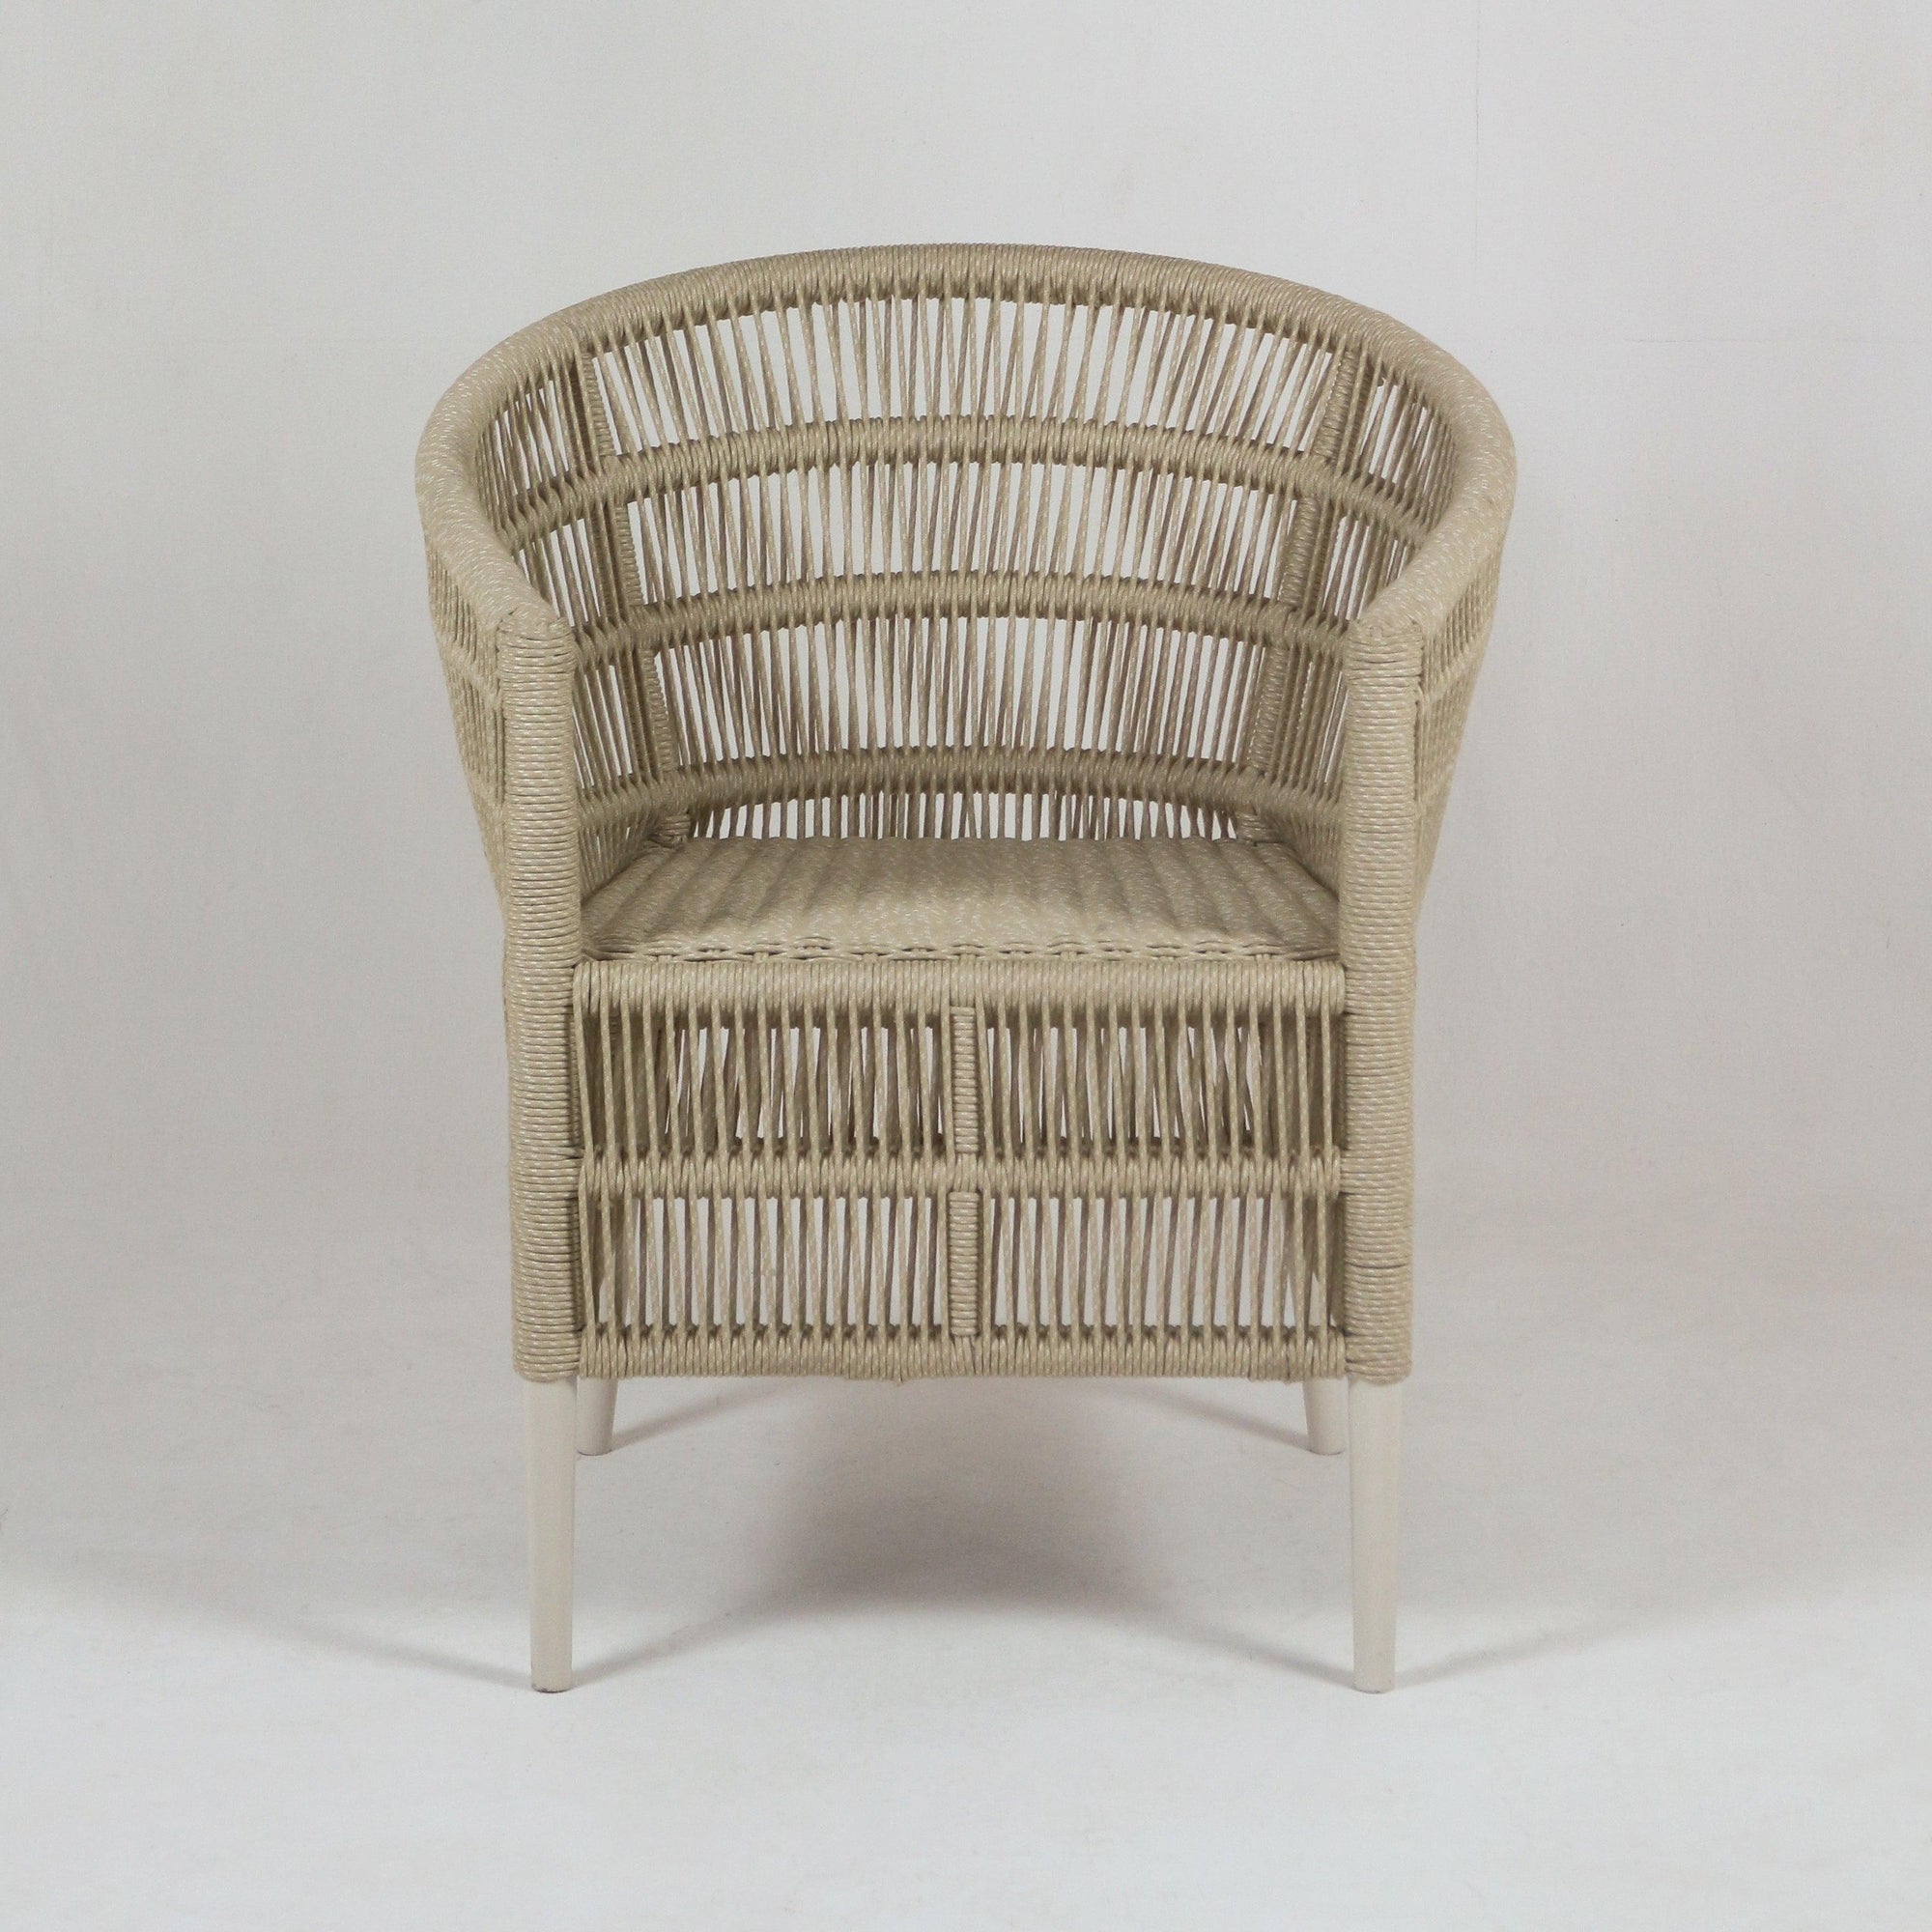 Flora Woven Corded Rattan Outdoor Chair - INTERIORTONIC